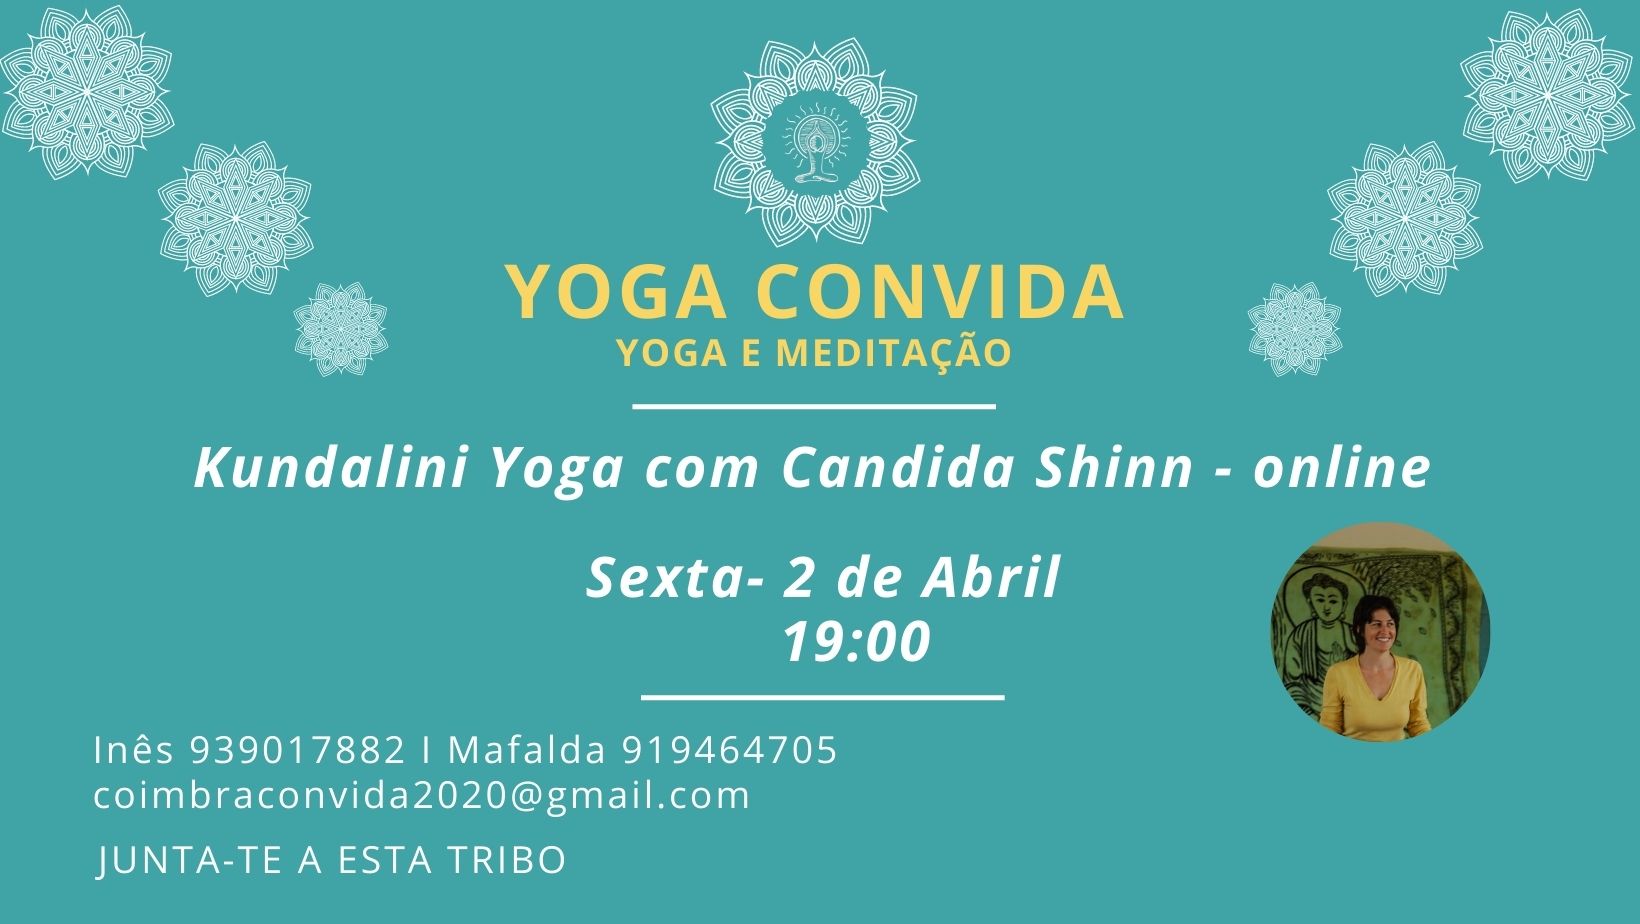 Kundalini Yoga com Candida Shinn